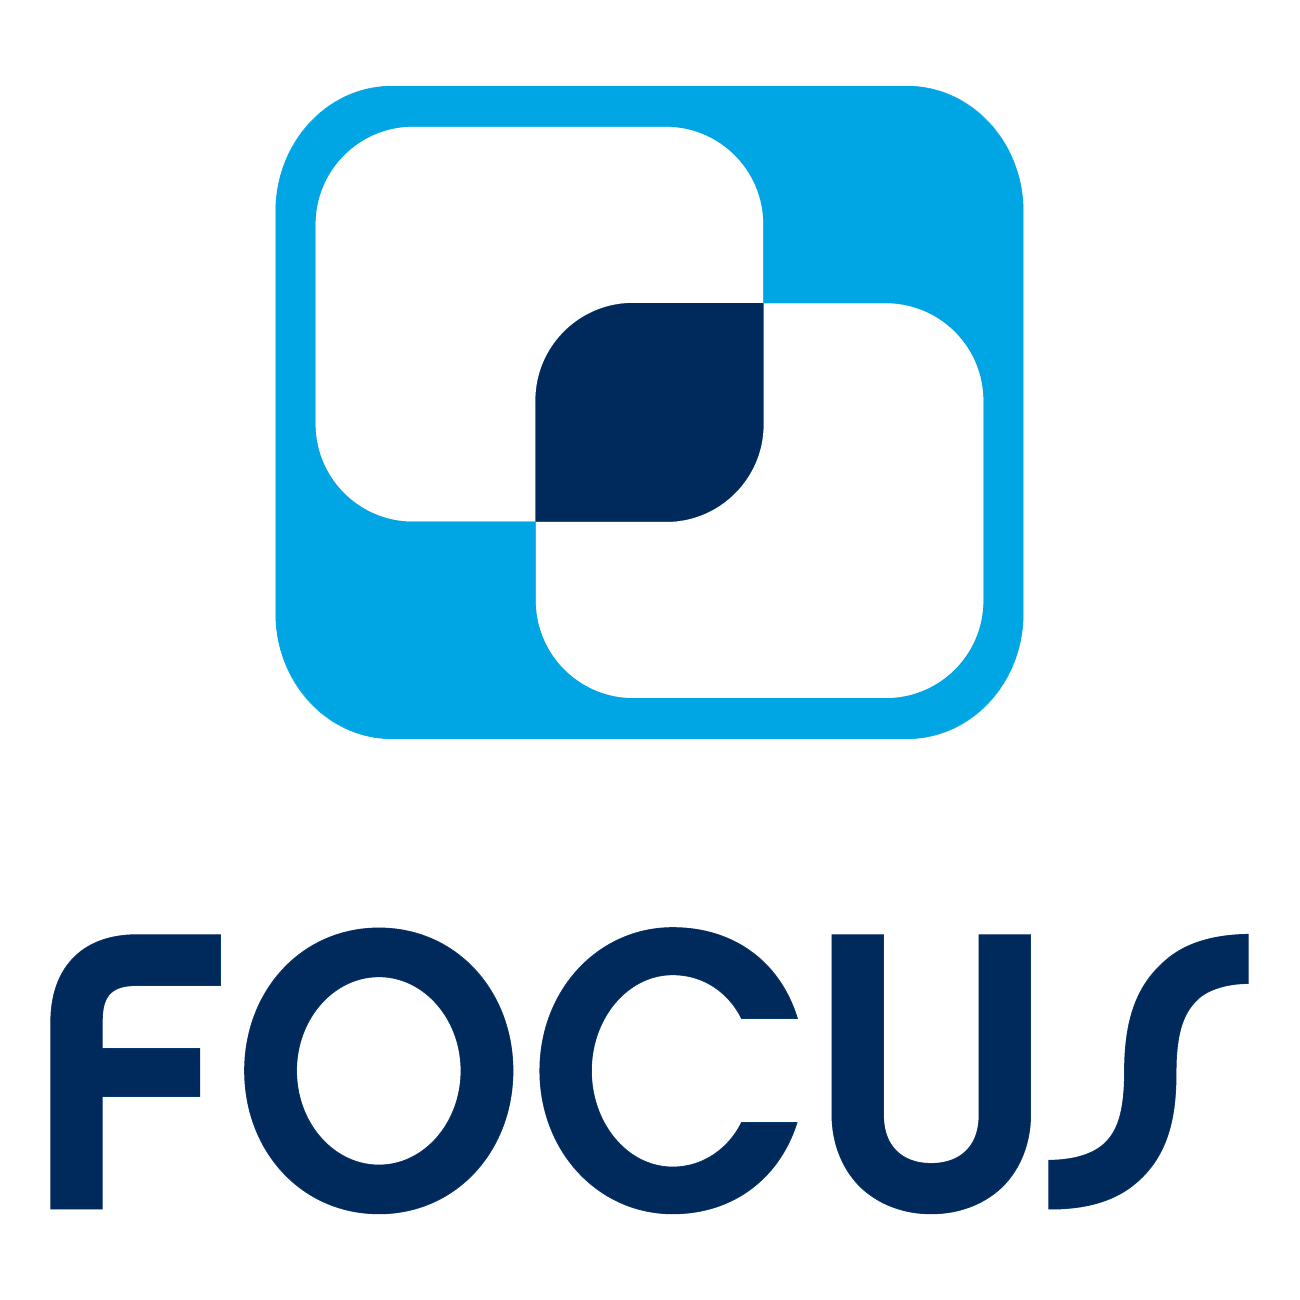 File:Focus logo.png.